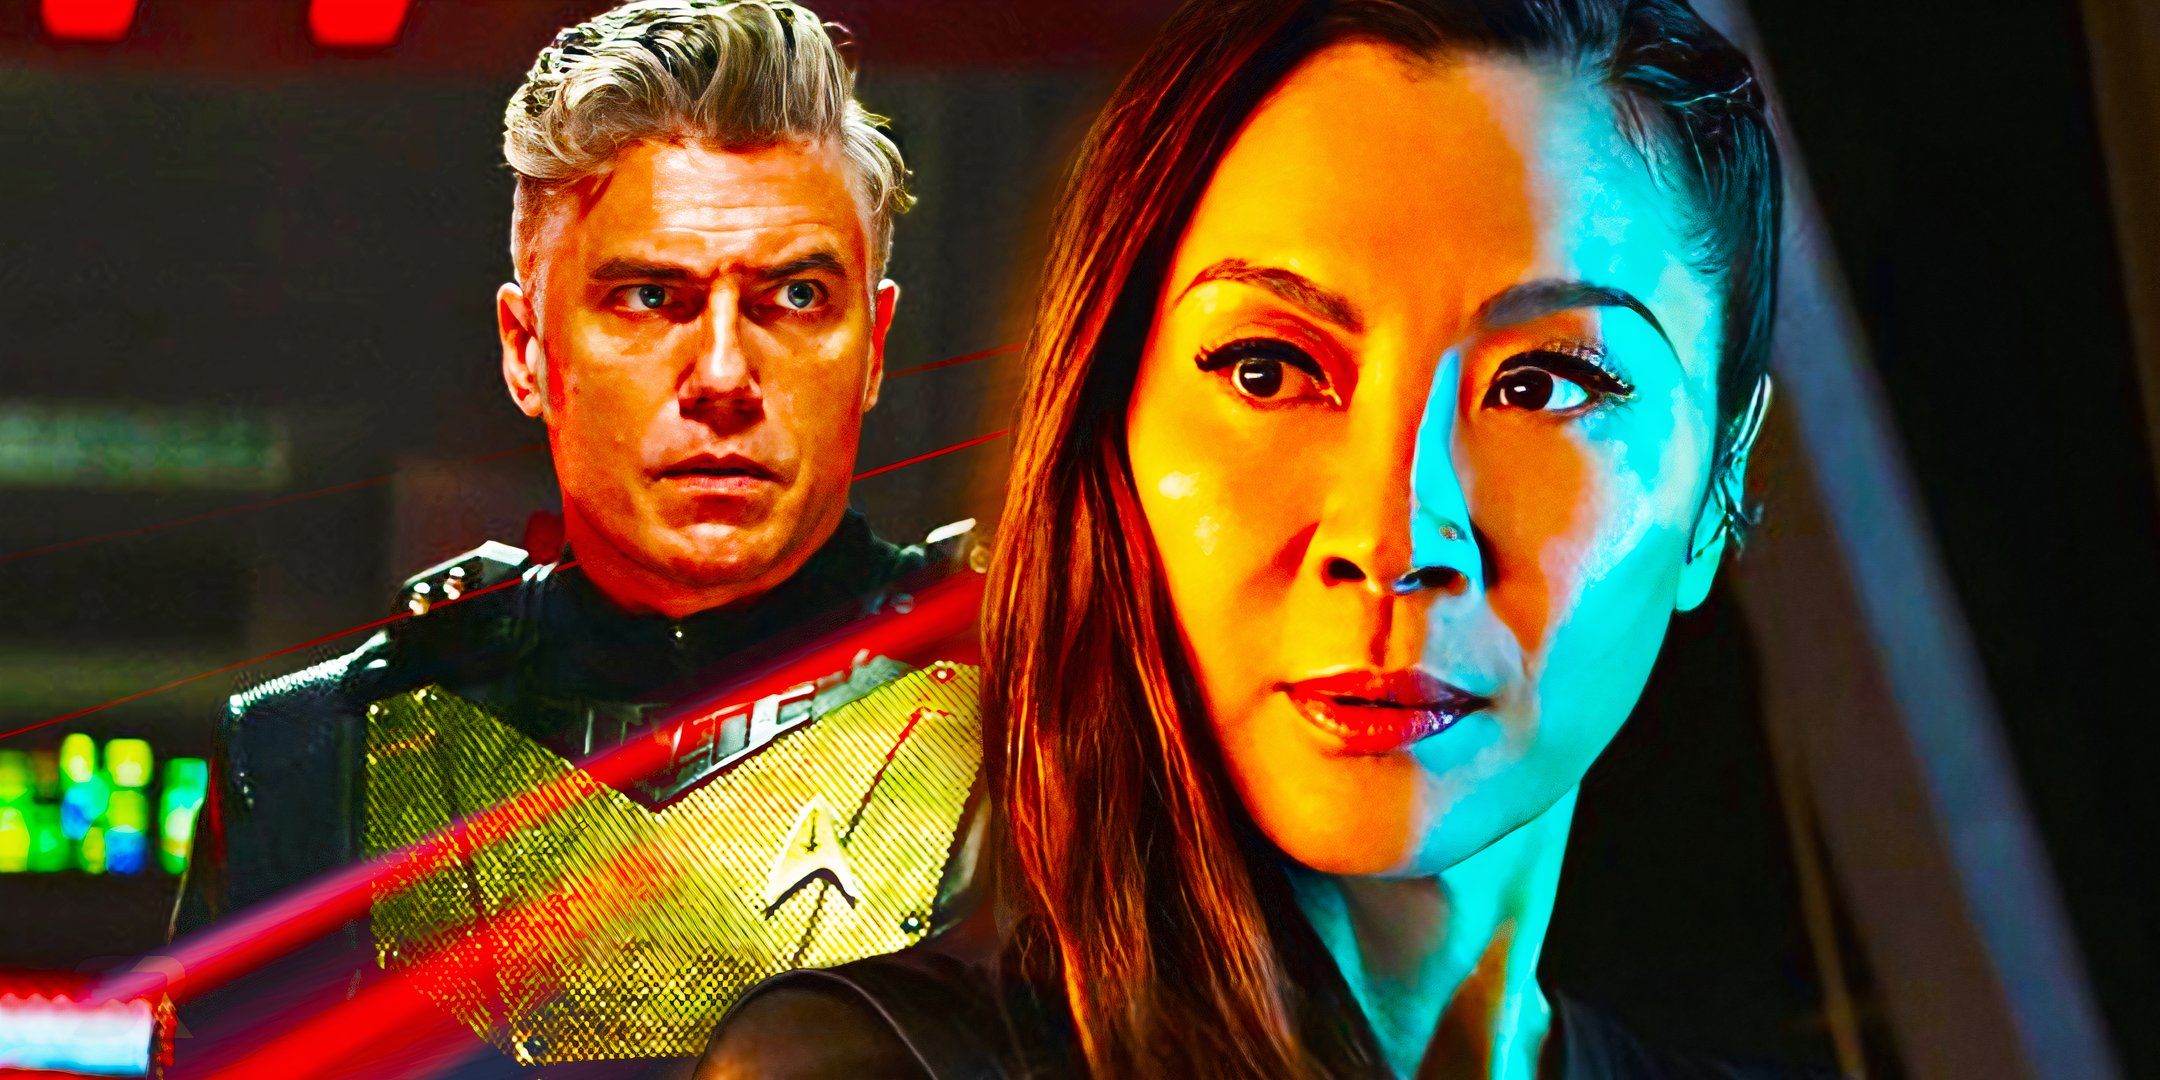 Captain Christopher Pike and Emperor Philippa Georgiou are Star Trek's future.